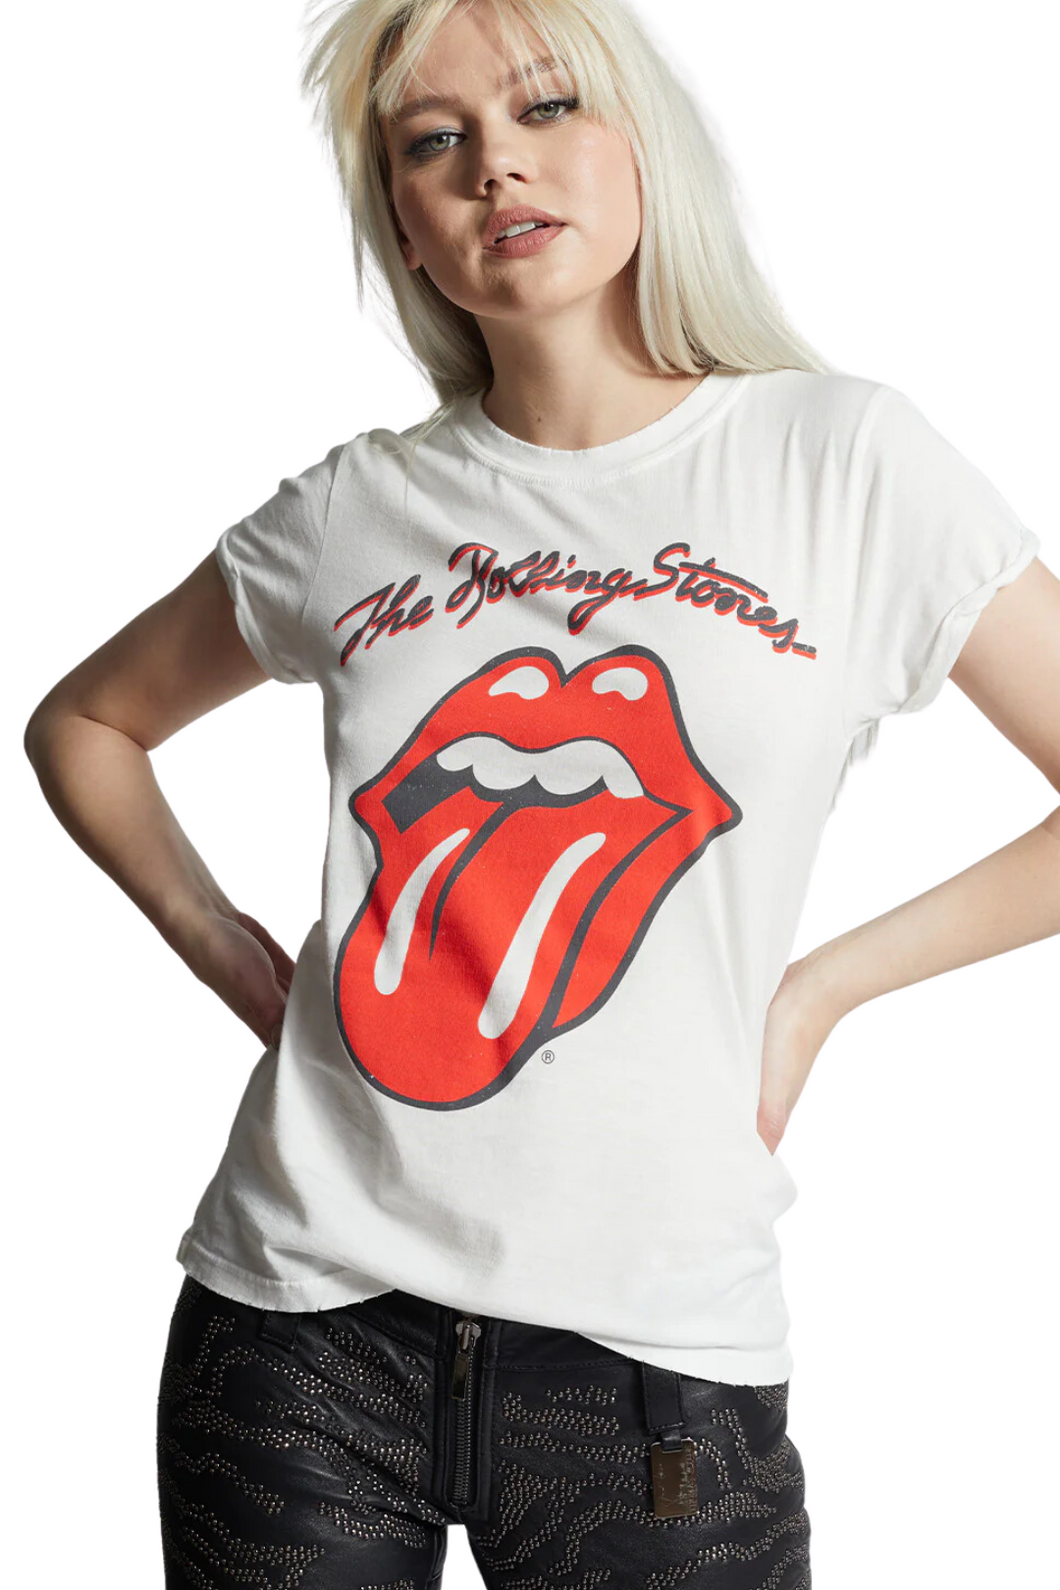 Rolling Stones Live Tee